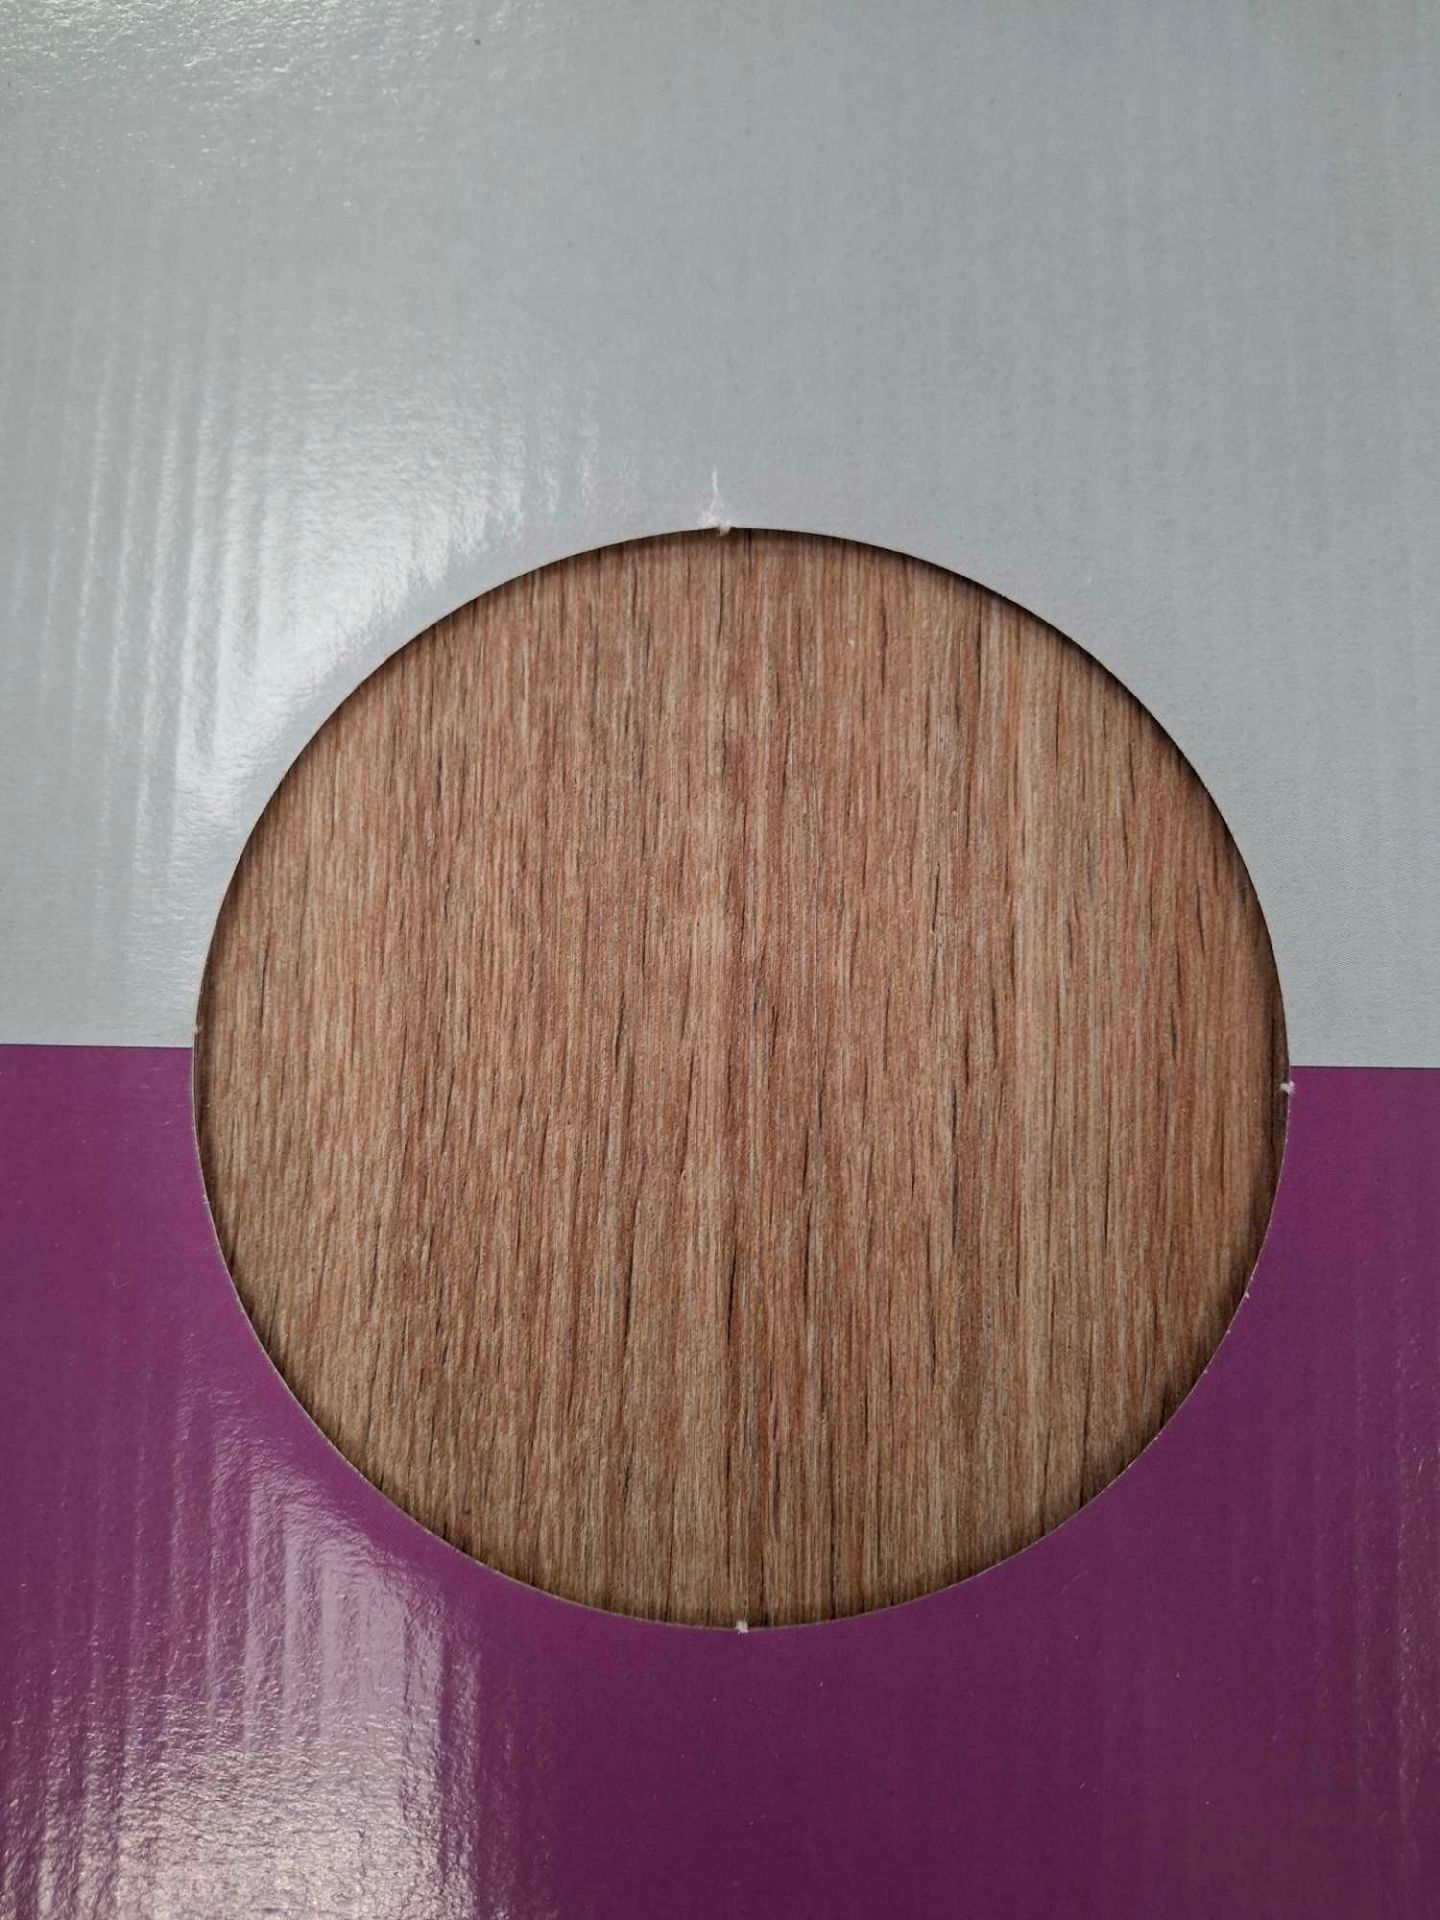 8 Packs Of Wood Flooring Casablanca Oak 1316mm x 191mm x 4.5mm Per Plank 7 Planks Per Pack Covers - Image 4 of 5